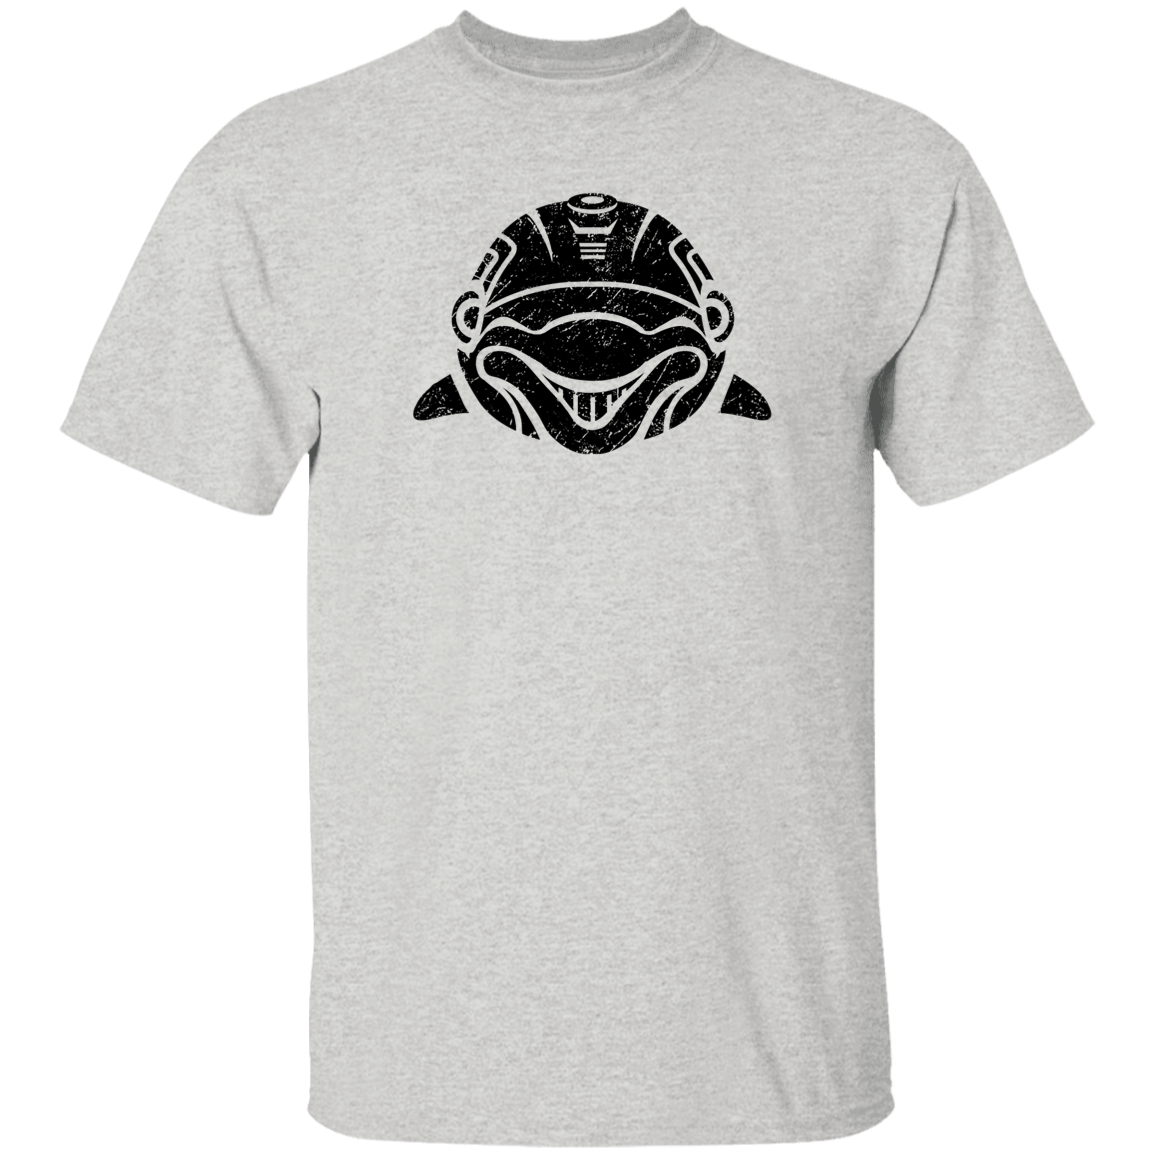 Black Distressed Emblem T-Shirt for Kids (Dolphin/Clicker)